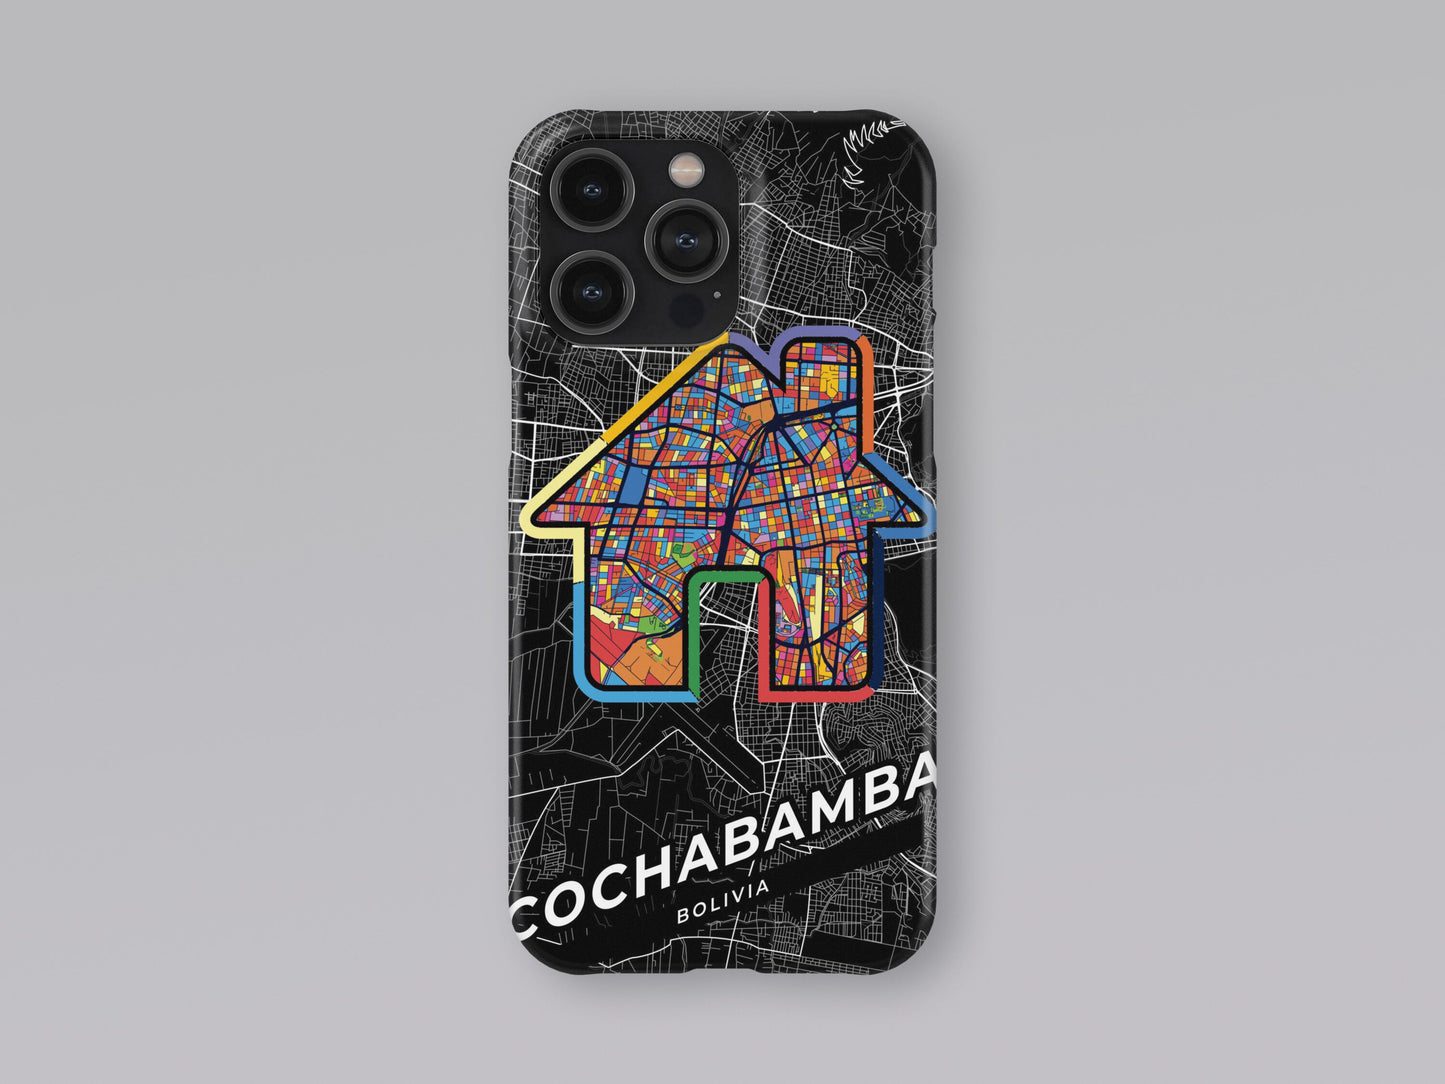 Cochabamba Bolivia slim phone case with colorful icon. Birthday, wedding or housewarming gift. Couple match cases. 3